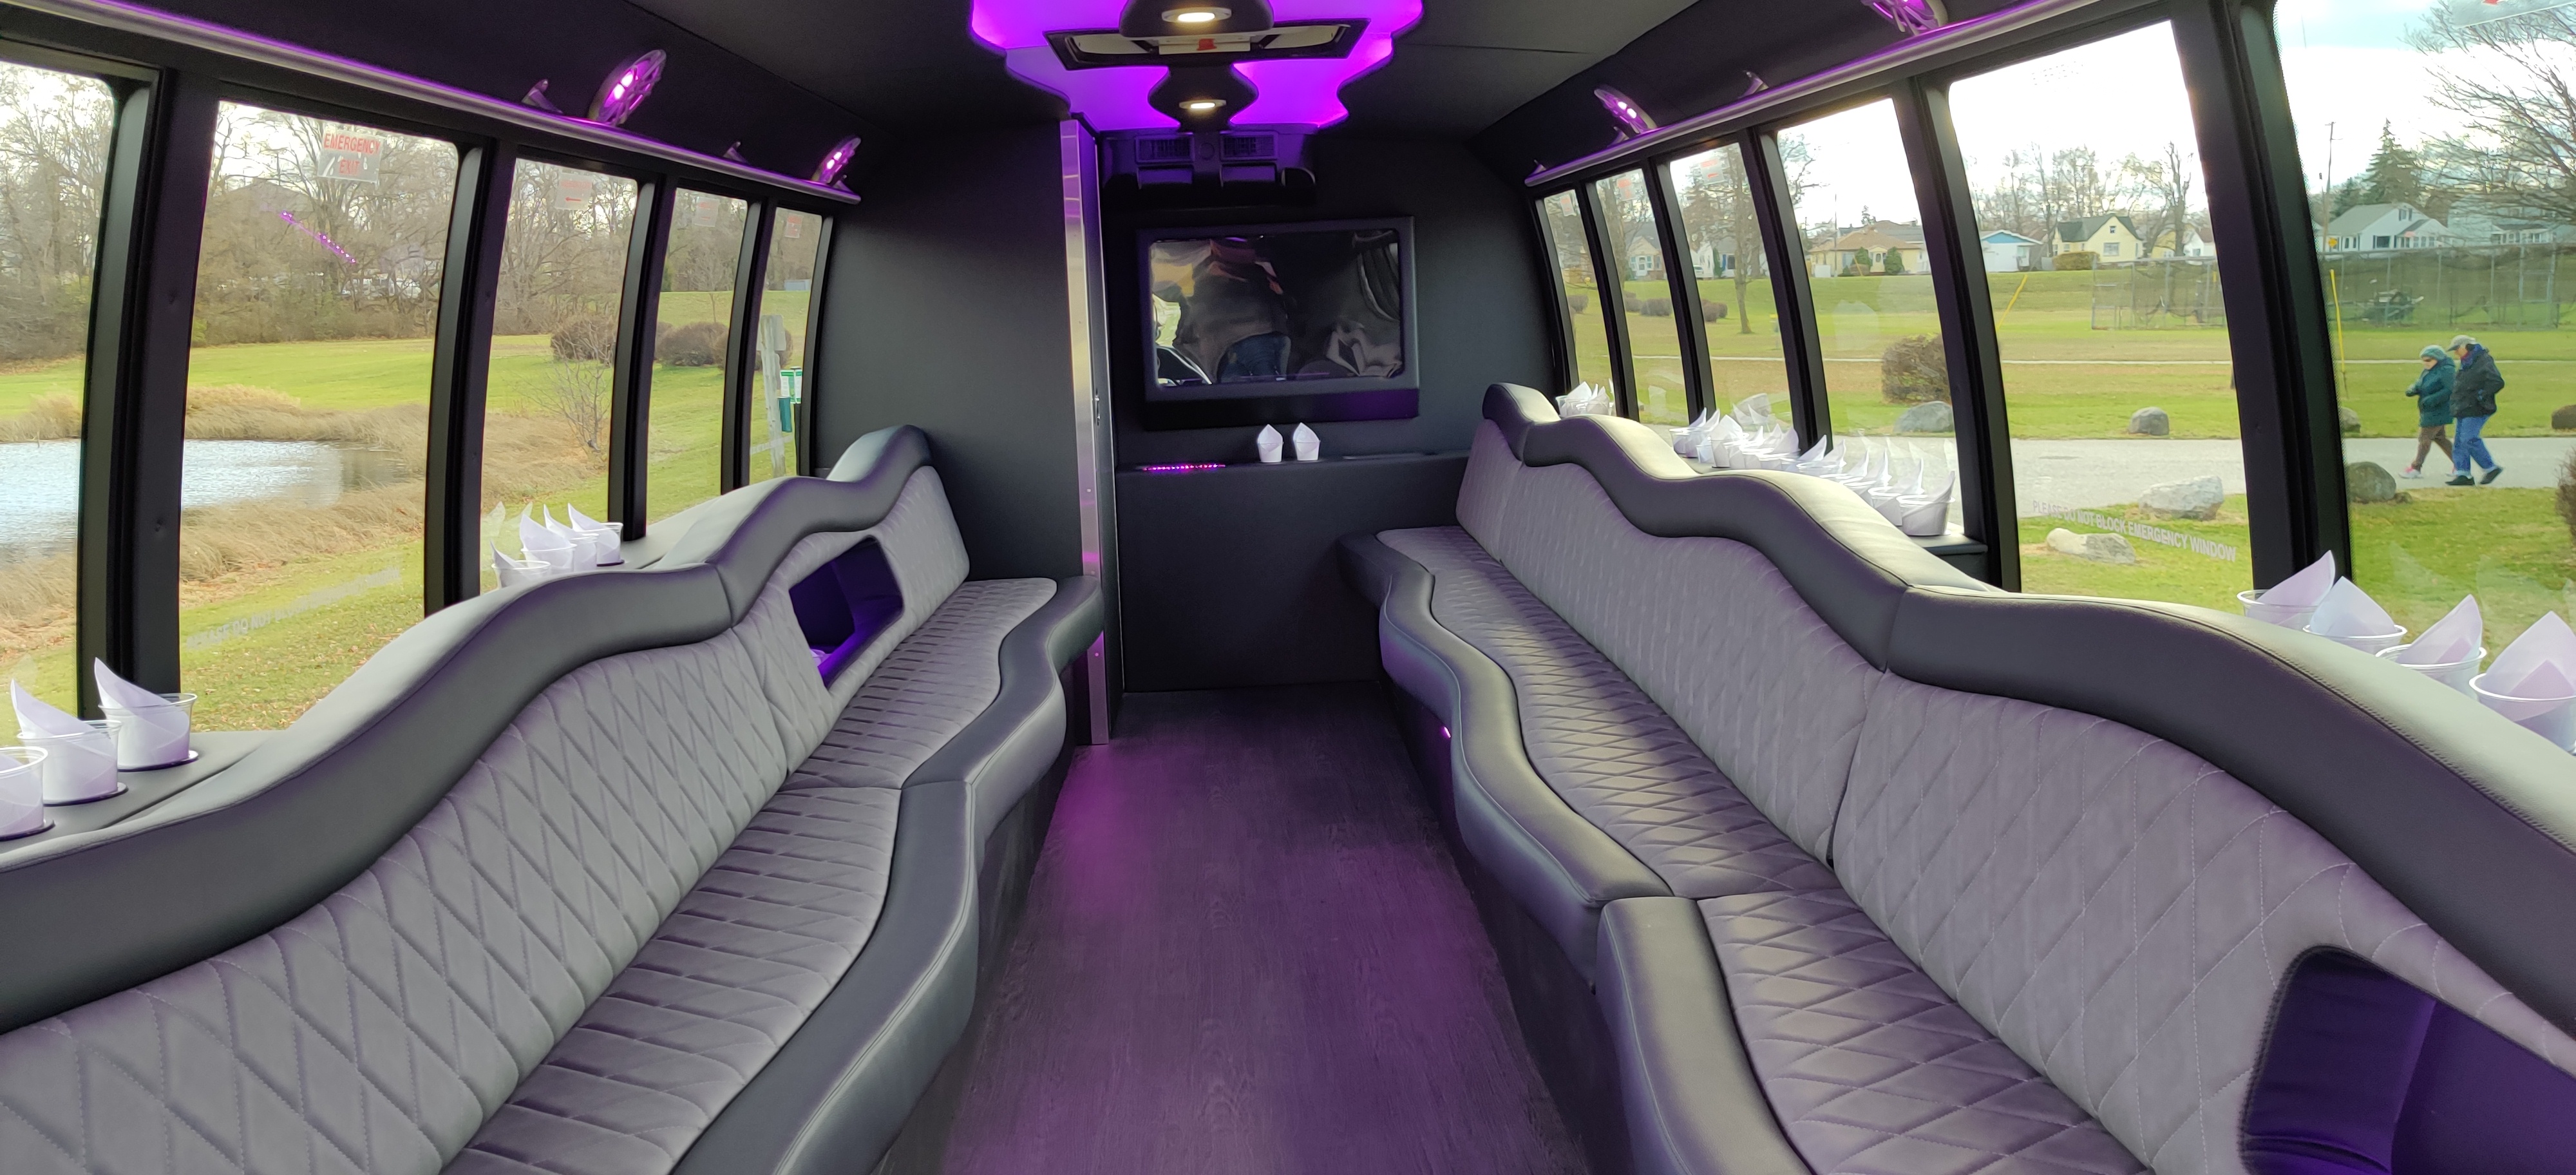 28-2 Passenger Luxury Limo Bus Interior 3